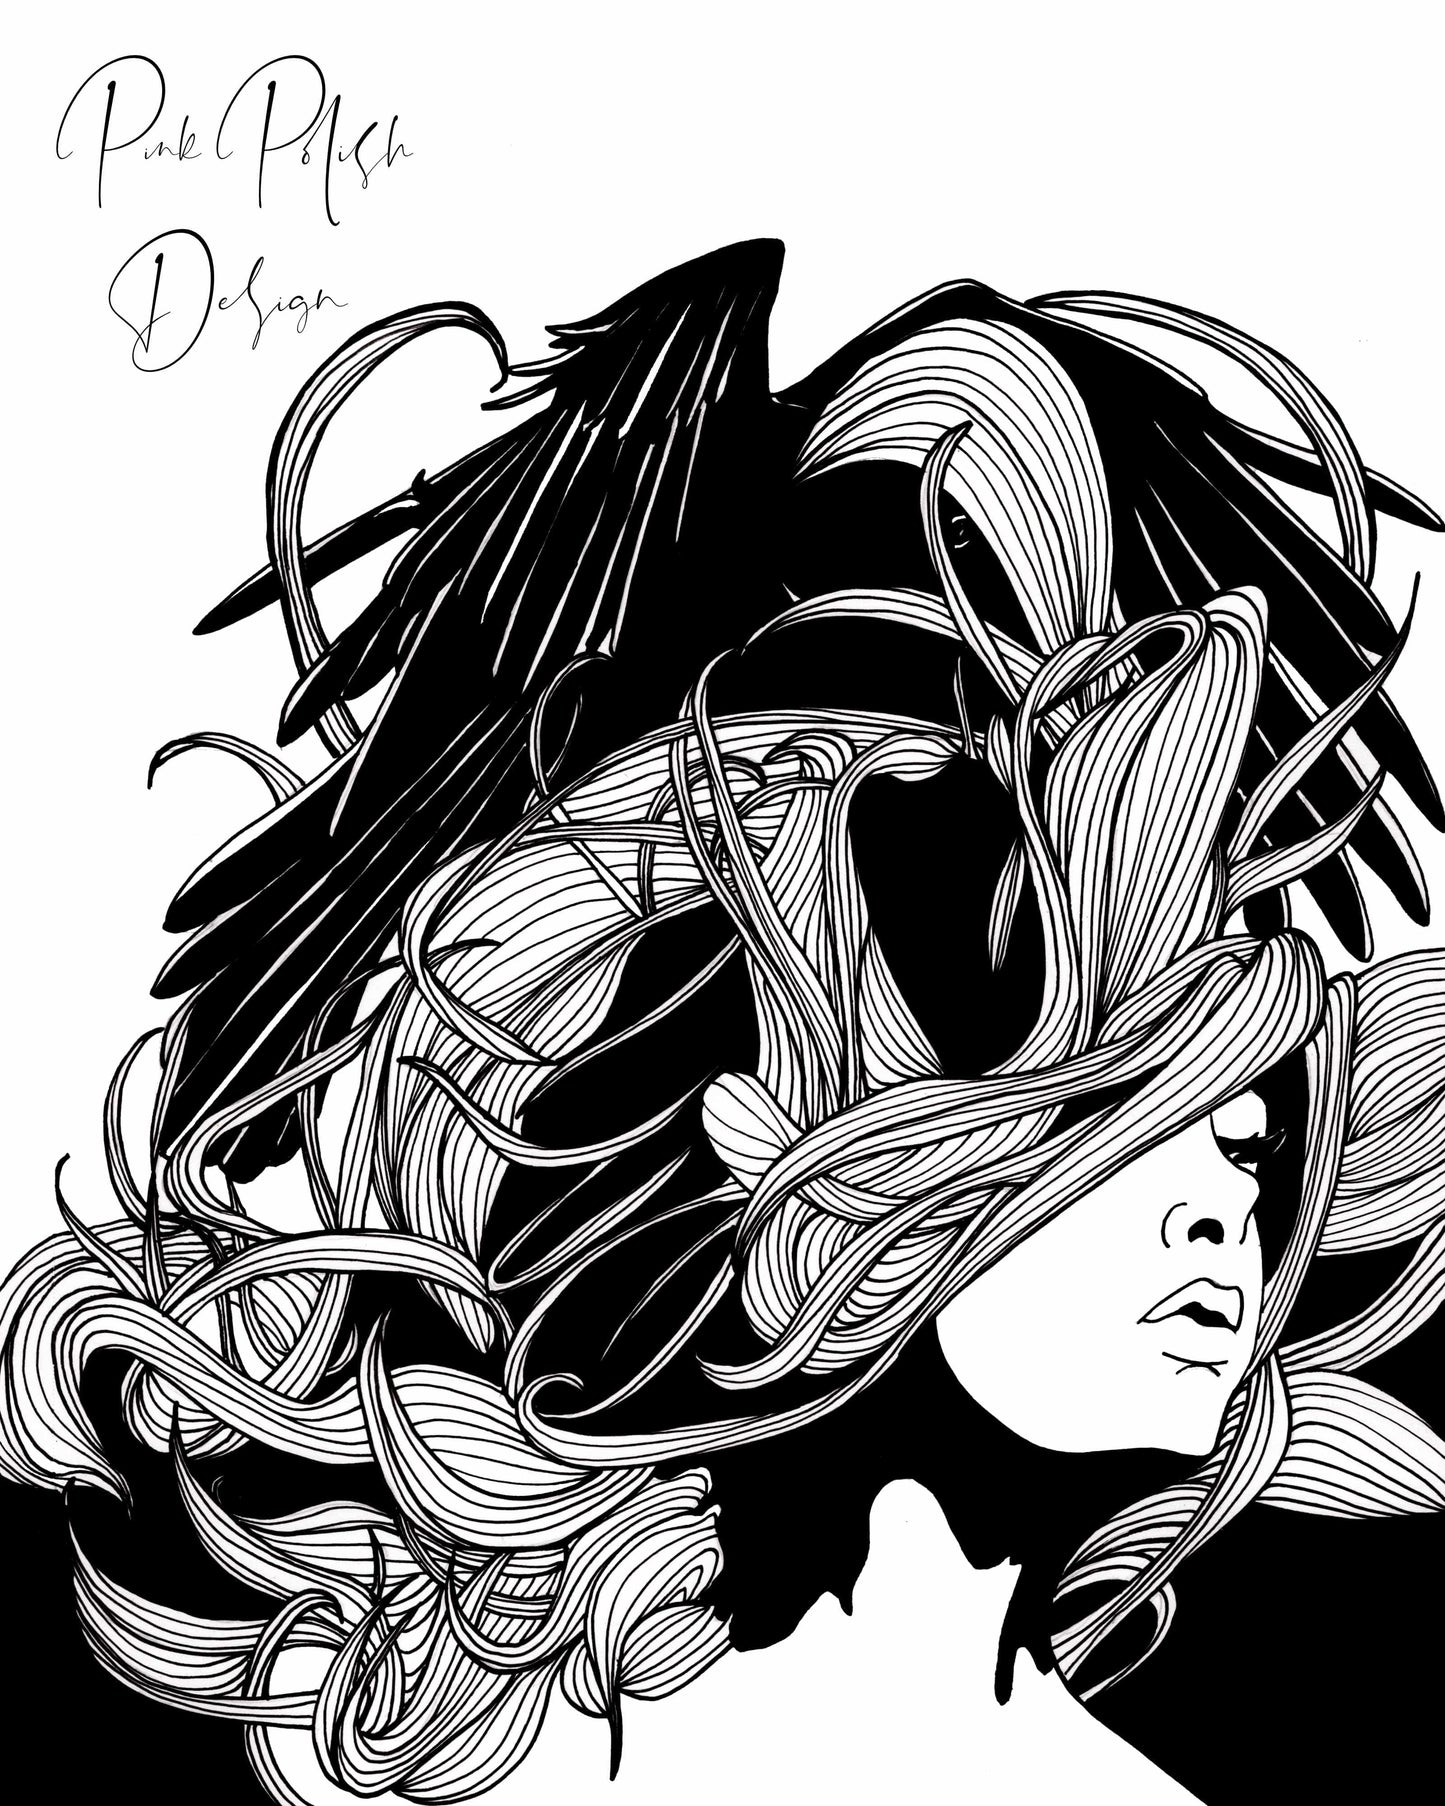 PinkPolish Design Art Prints "Raven" Ink Drawing: Art Print